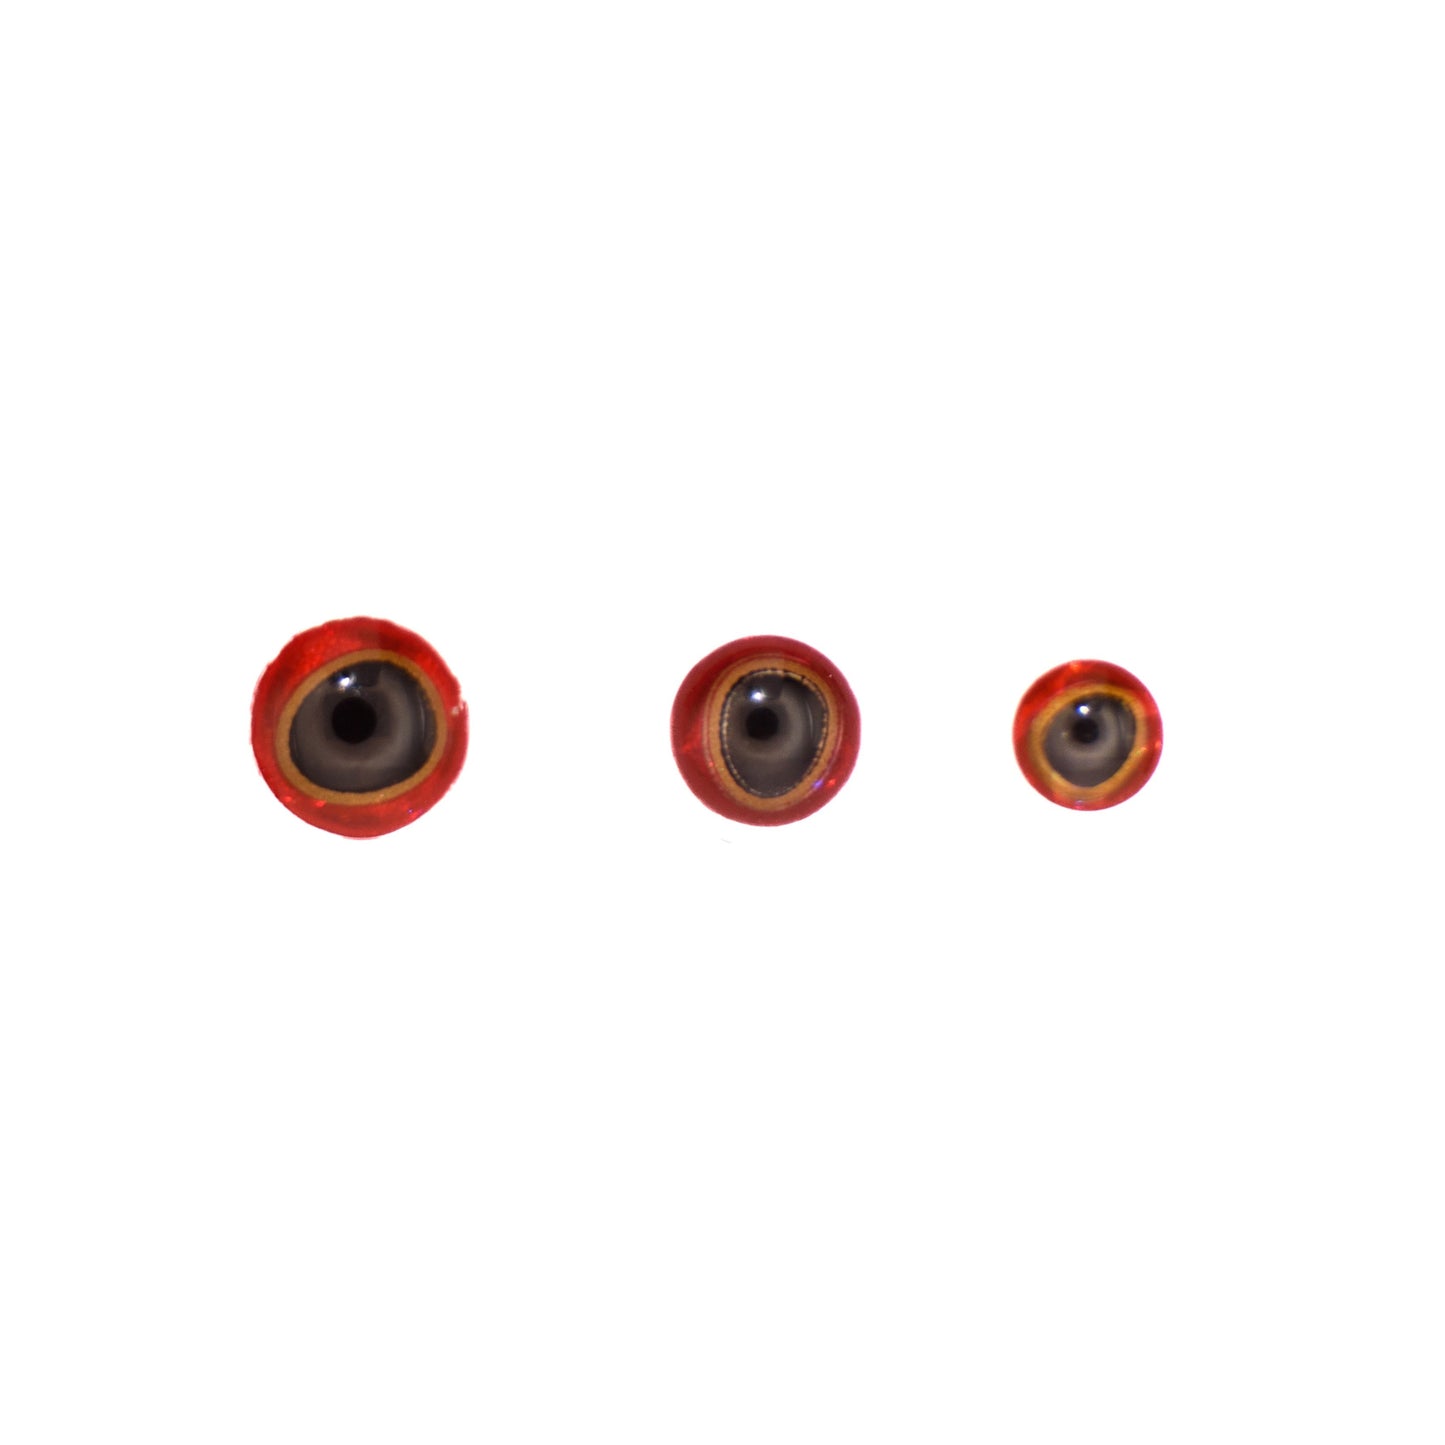 3D Eyes